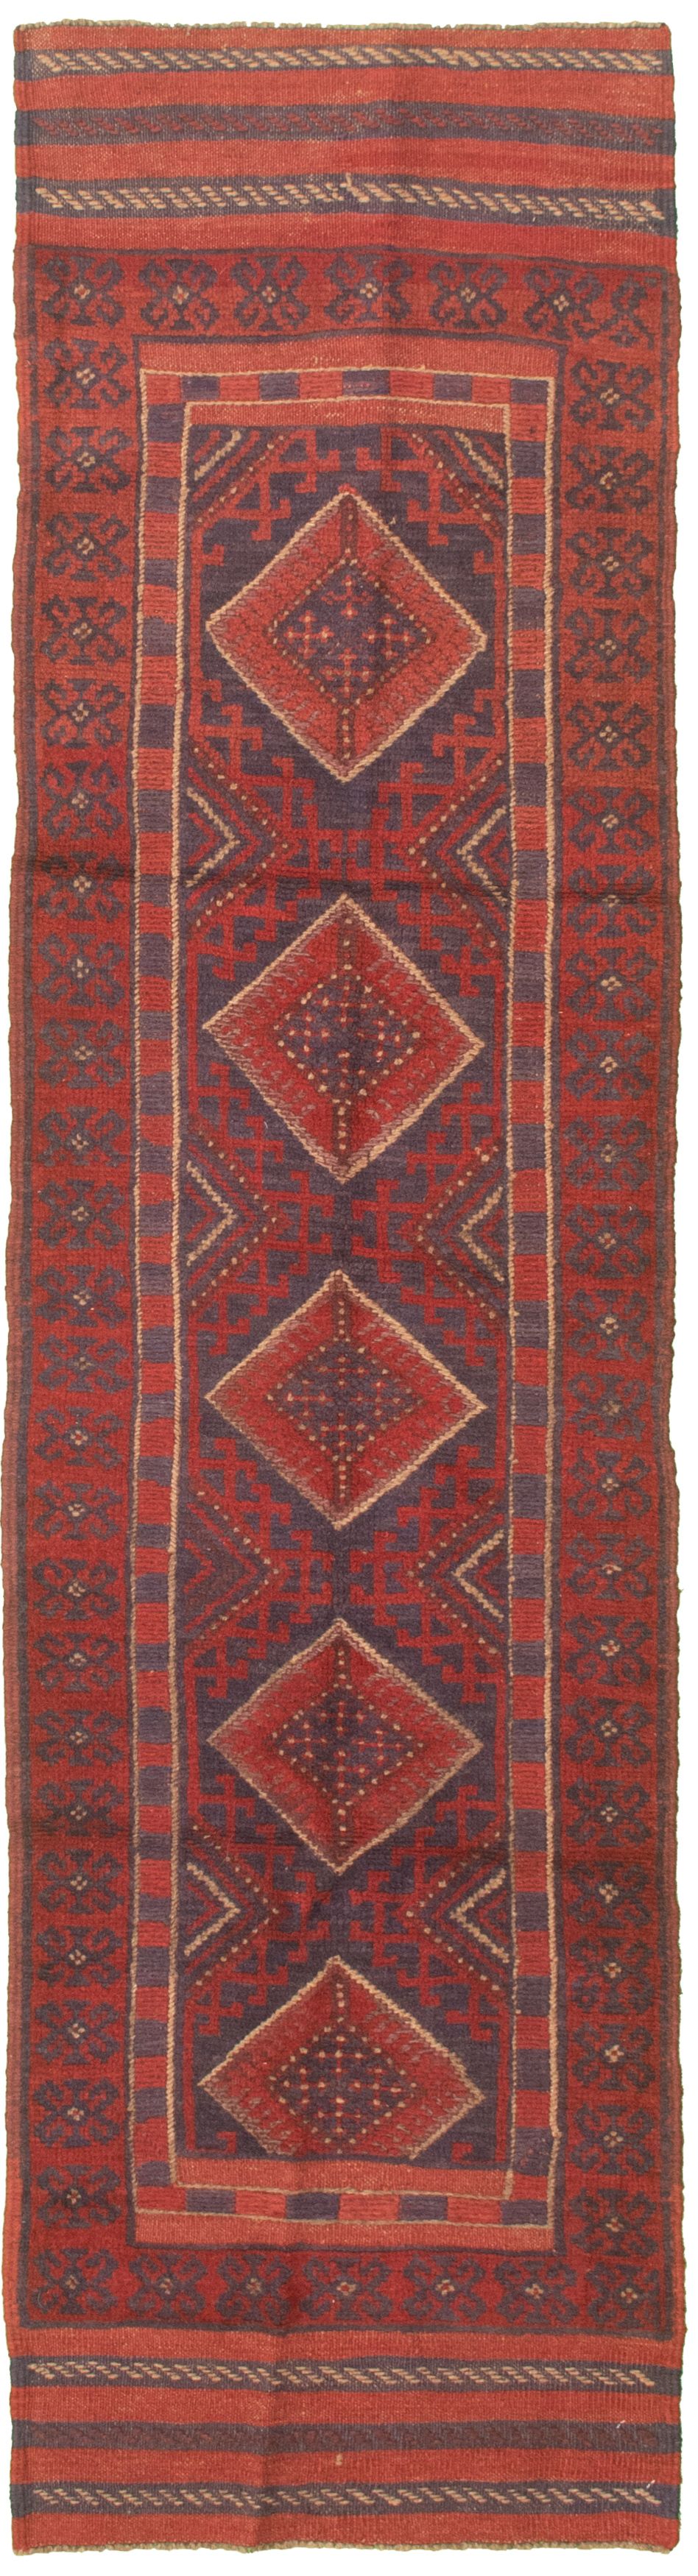 Hand-knotted Tajik Caucasian Red Wool Rug 2'0" x 8'11"  Size: 2'0" x 8'11"  